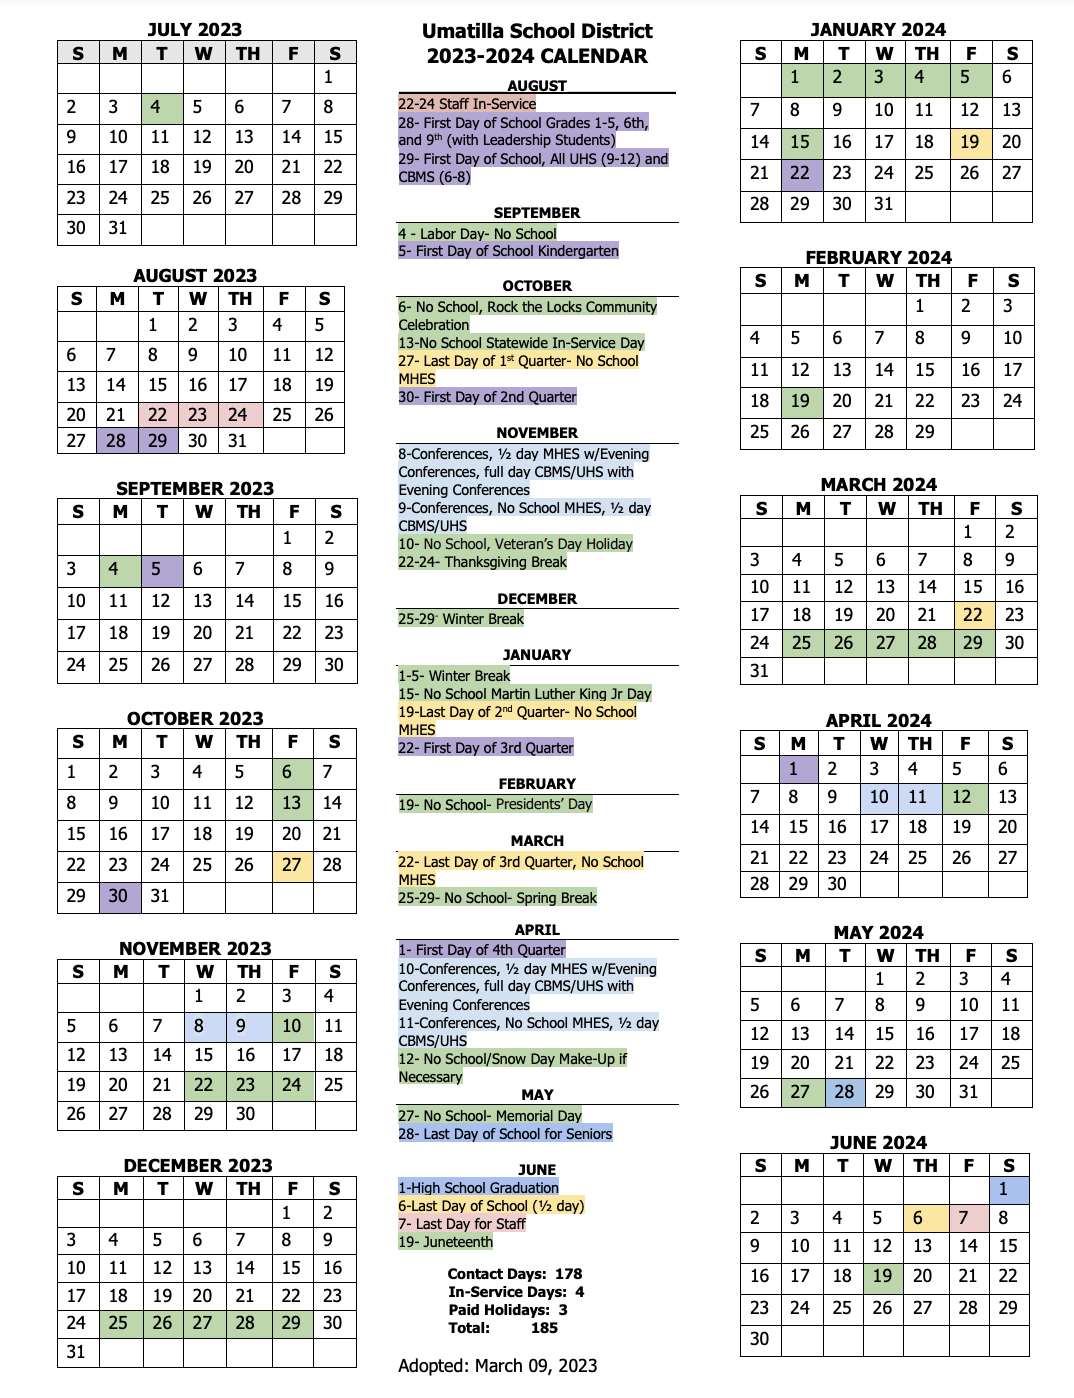 2023-24 School Year Calendar Image